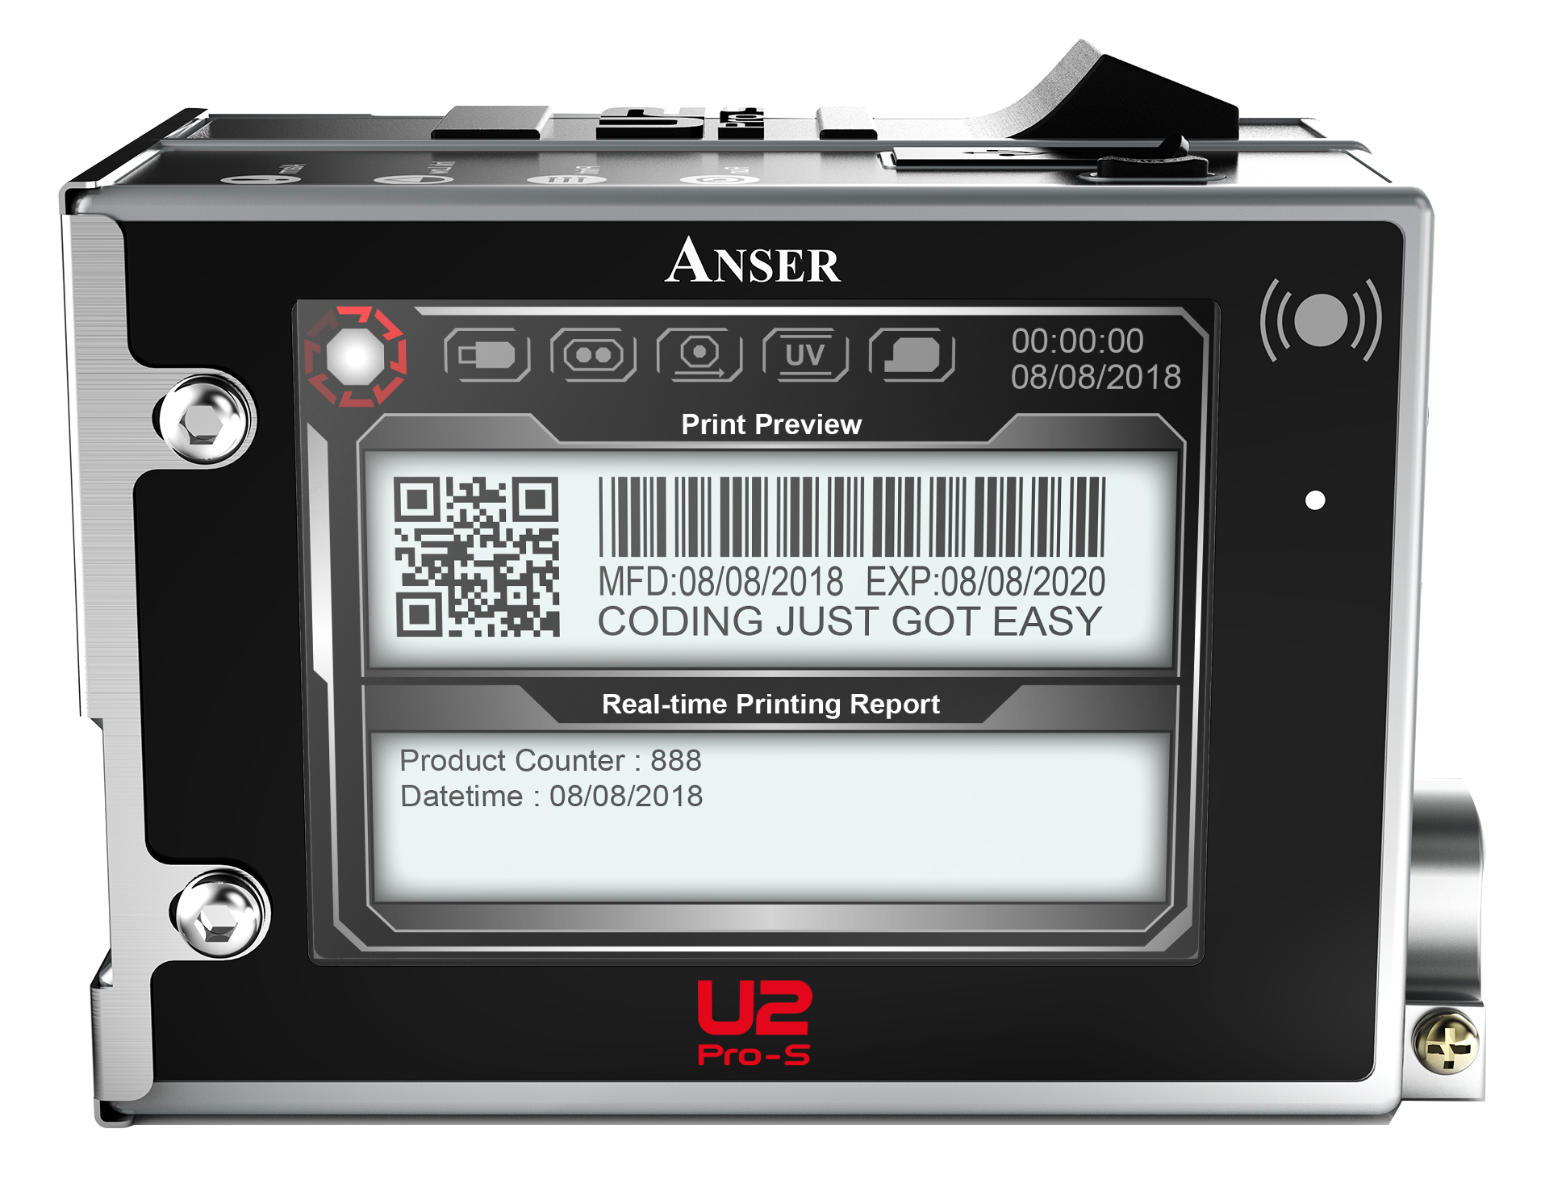 Anser U2 Pro-S Inkjet Printer